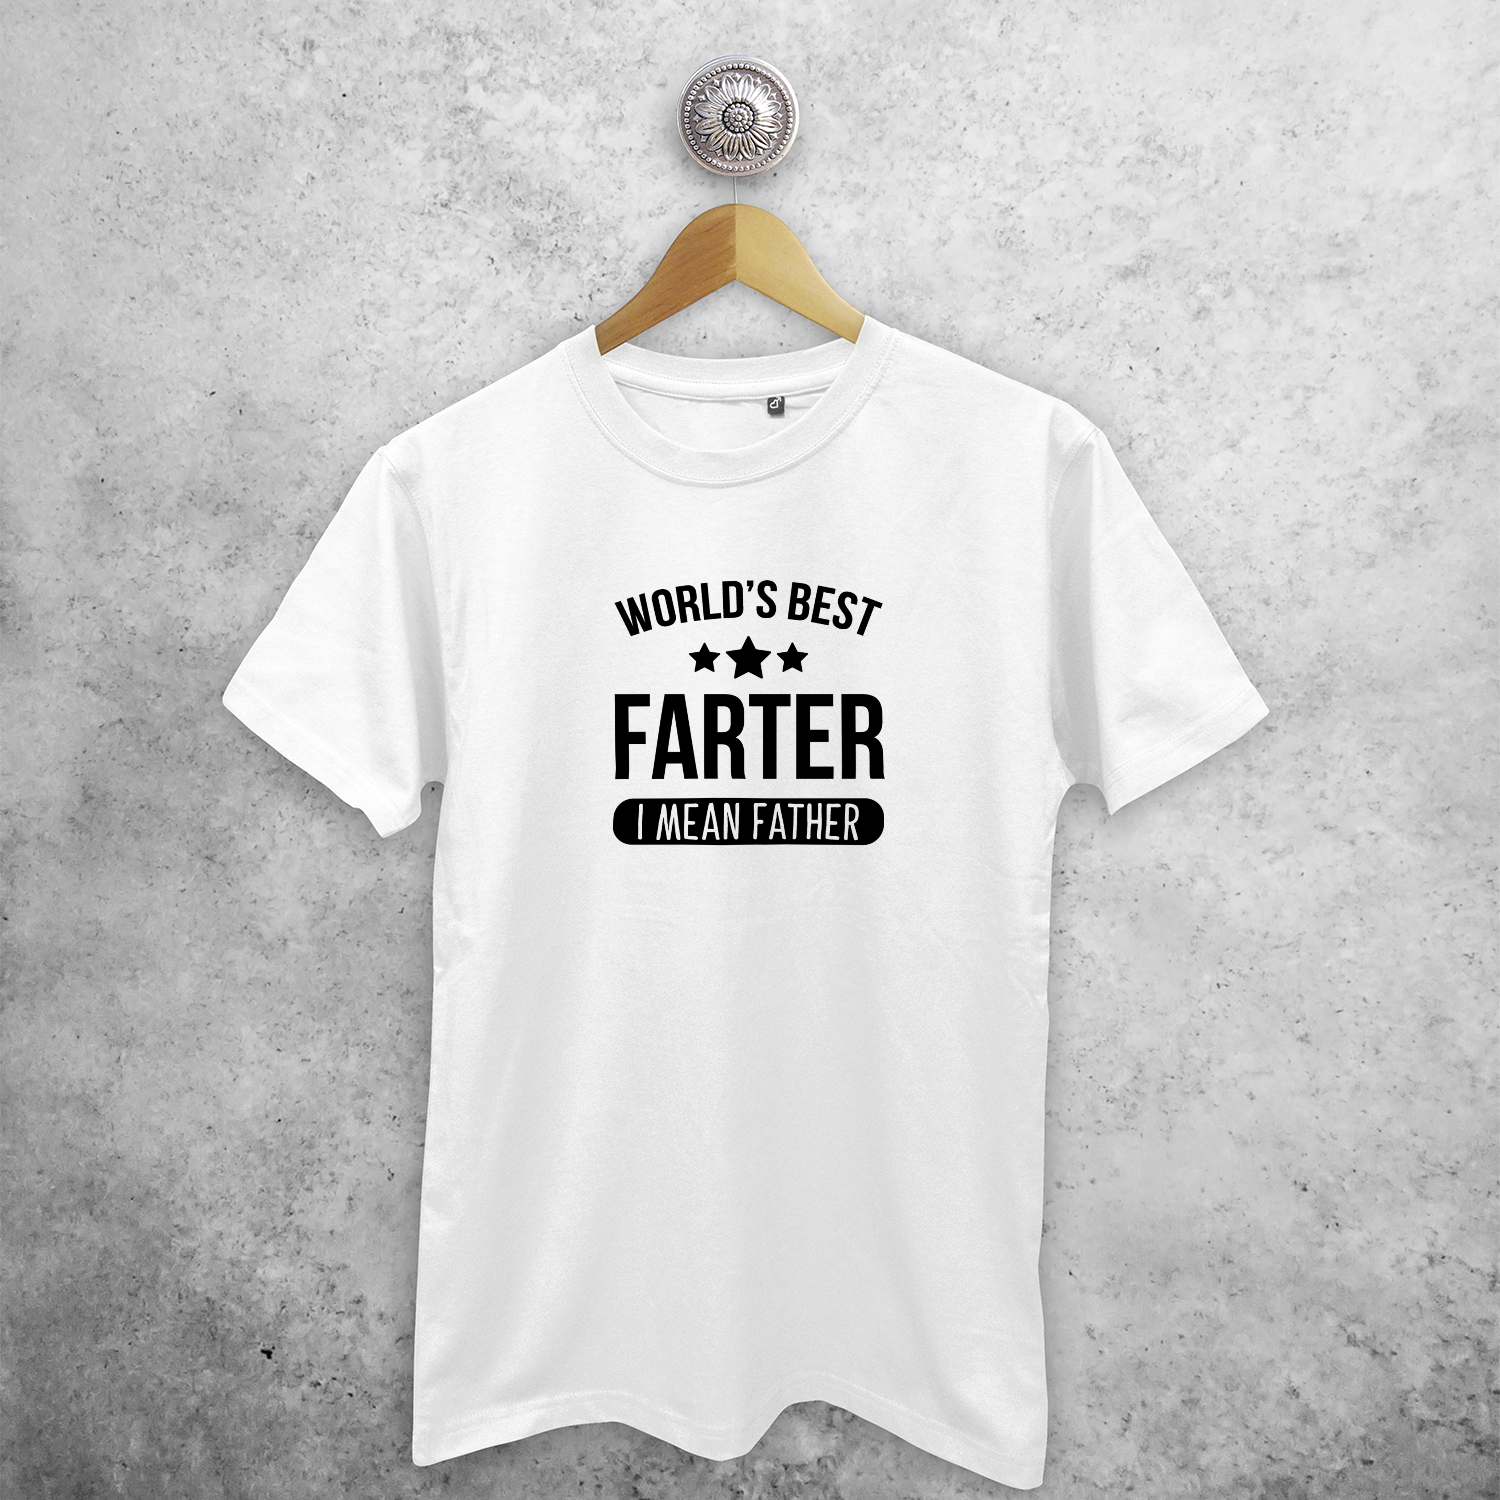 World's best farter - I mean father' volwassene shirt